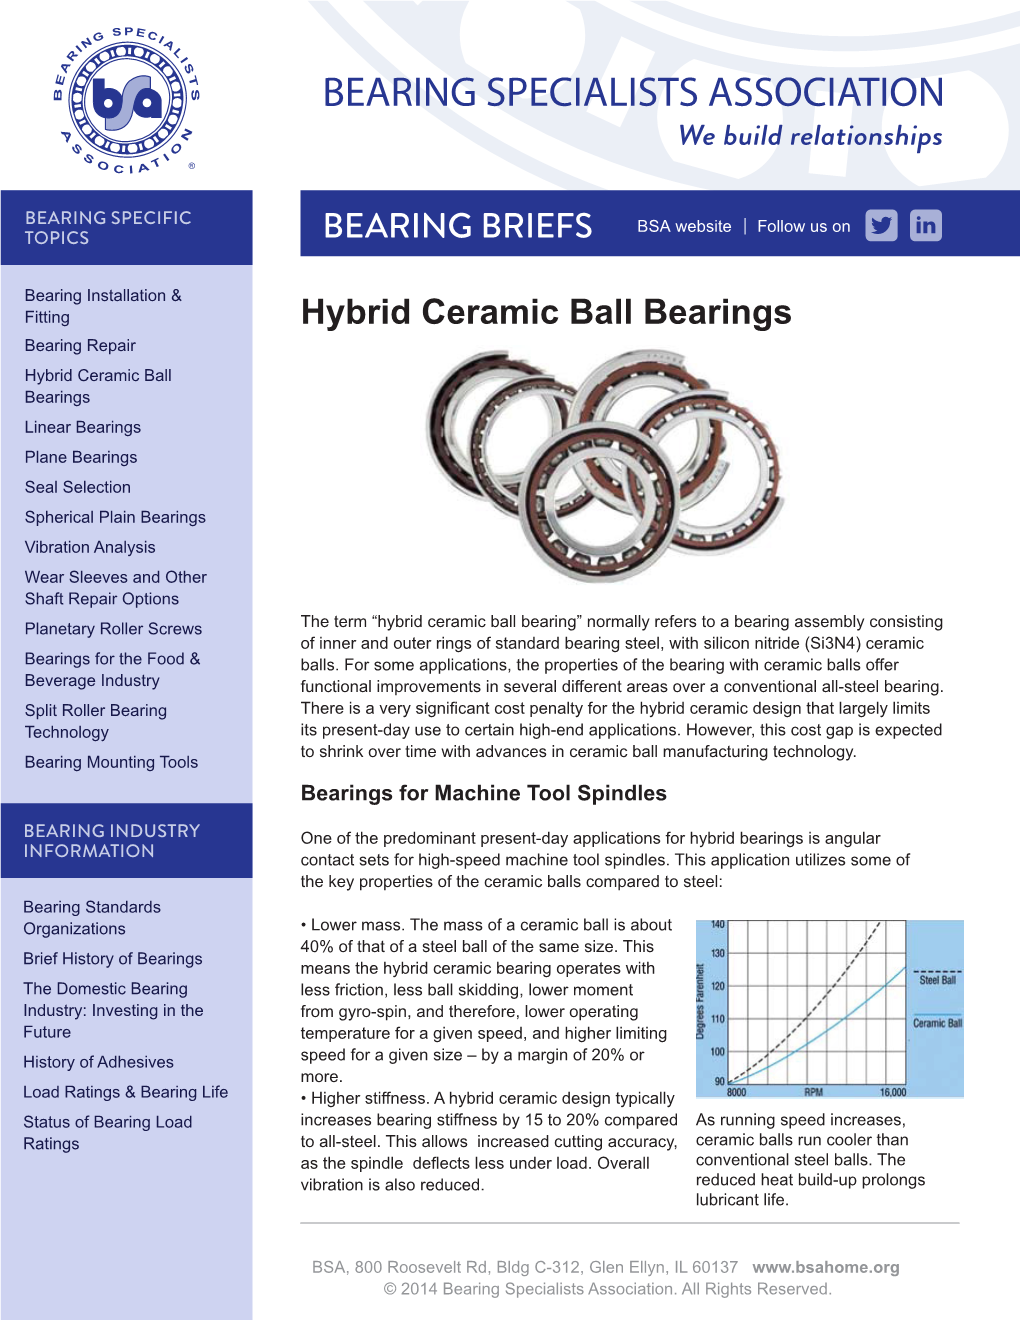 Hybrid Ceramic Ball Bearings